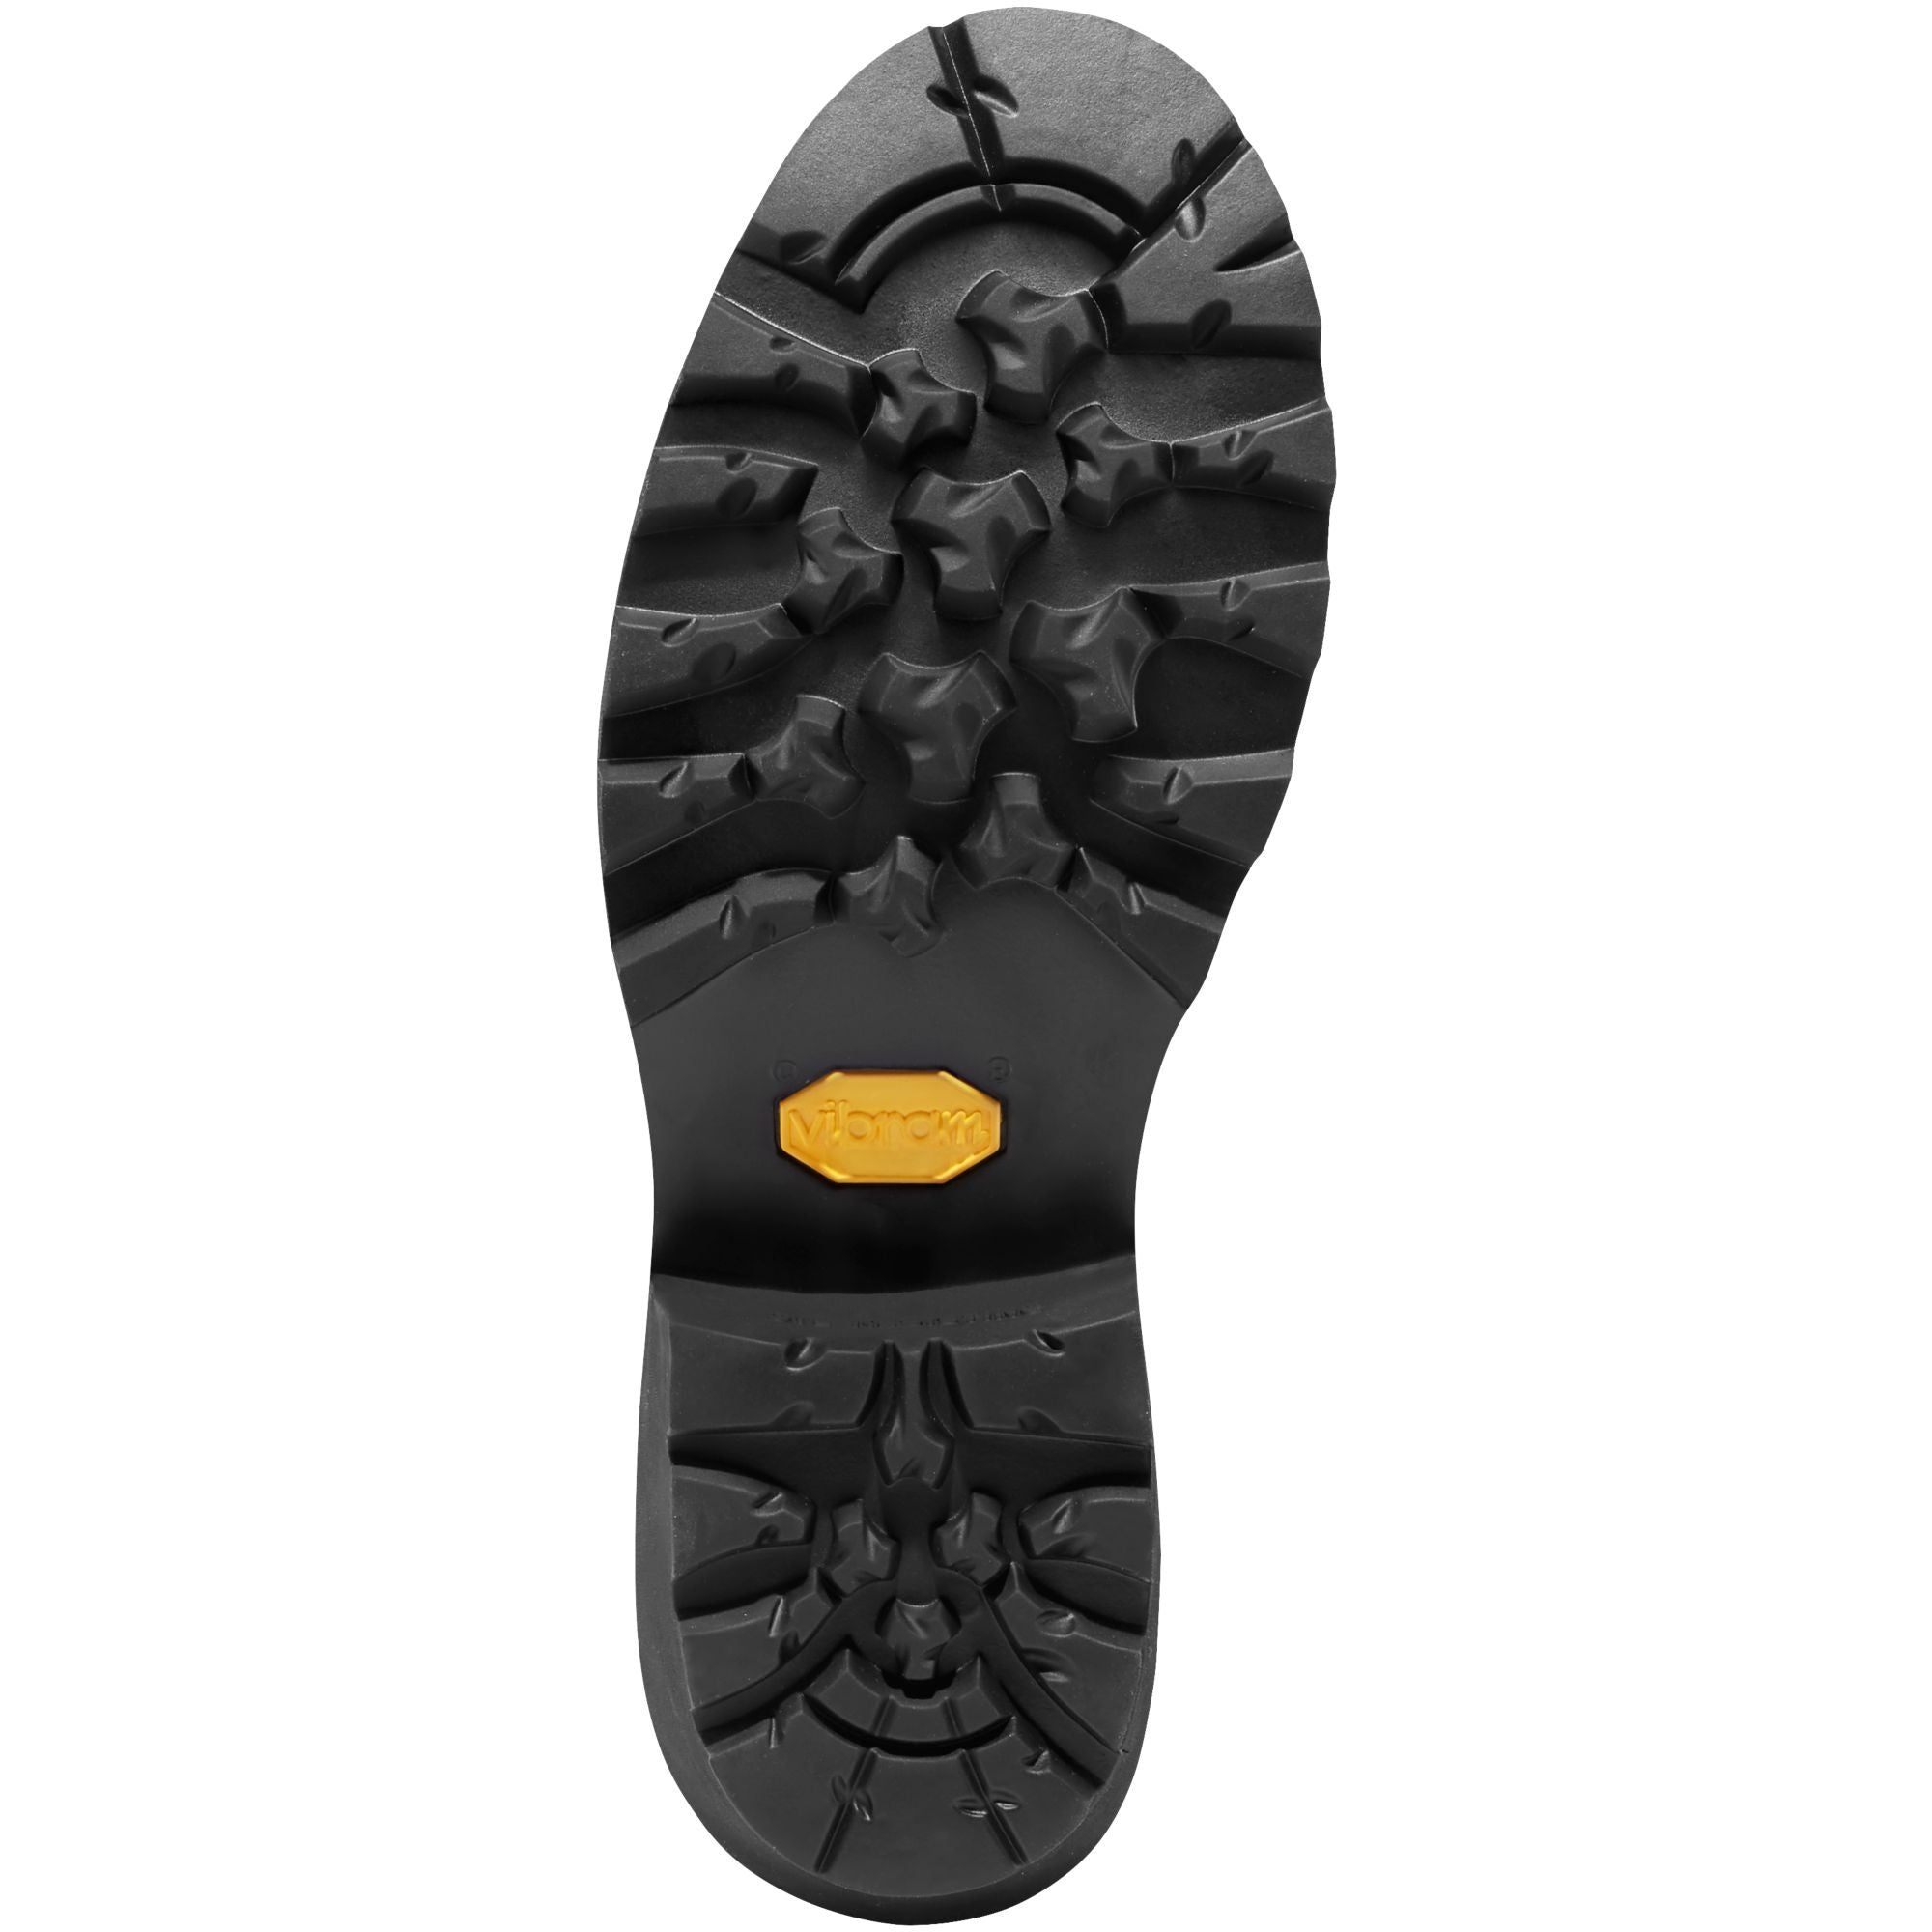 Danner Men's Logger Soft Toe WP Work Boot - Black - 15431  - Overlook Boots